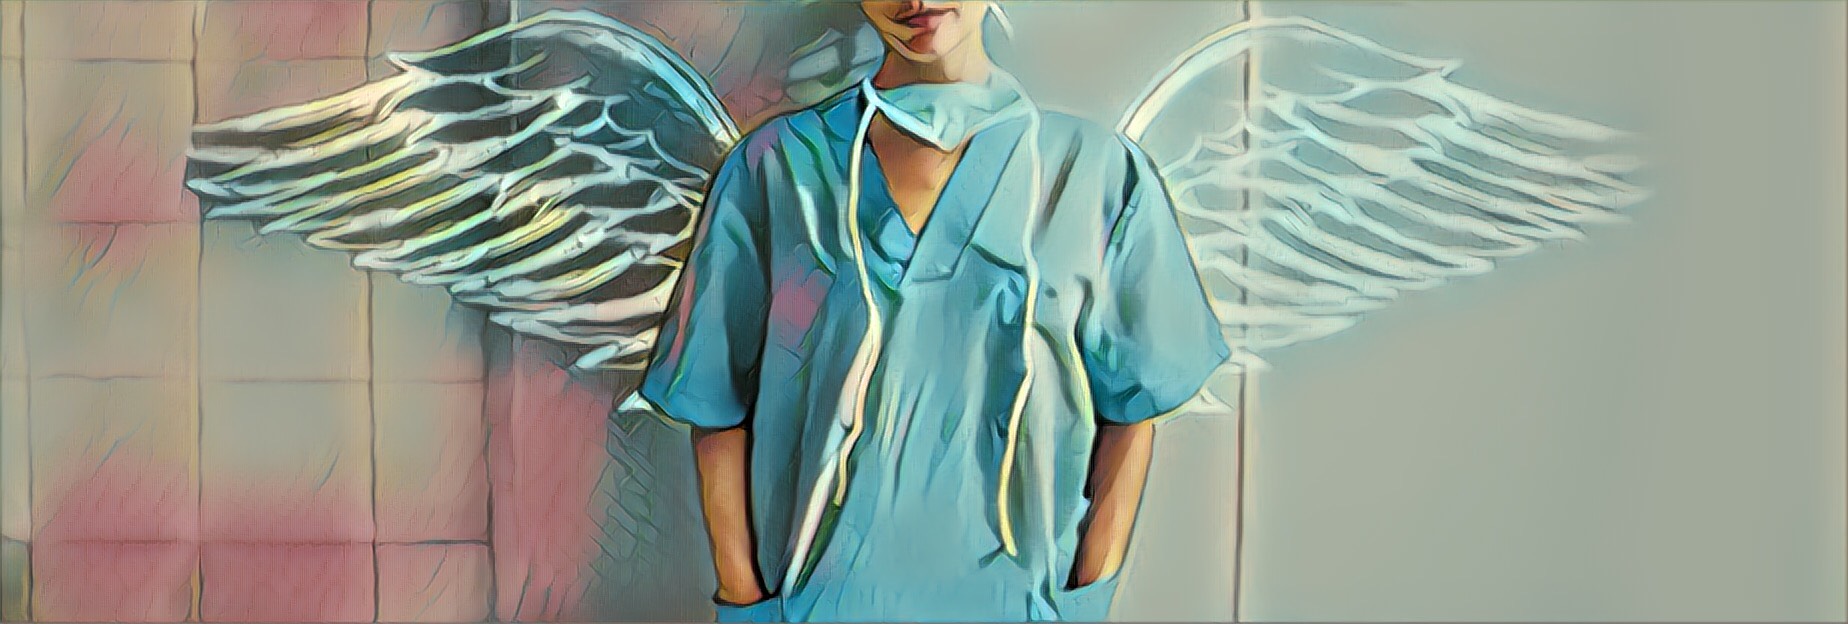 spital România îngerii în pantaloni albaştri slider